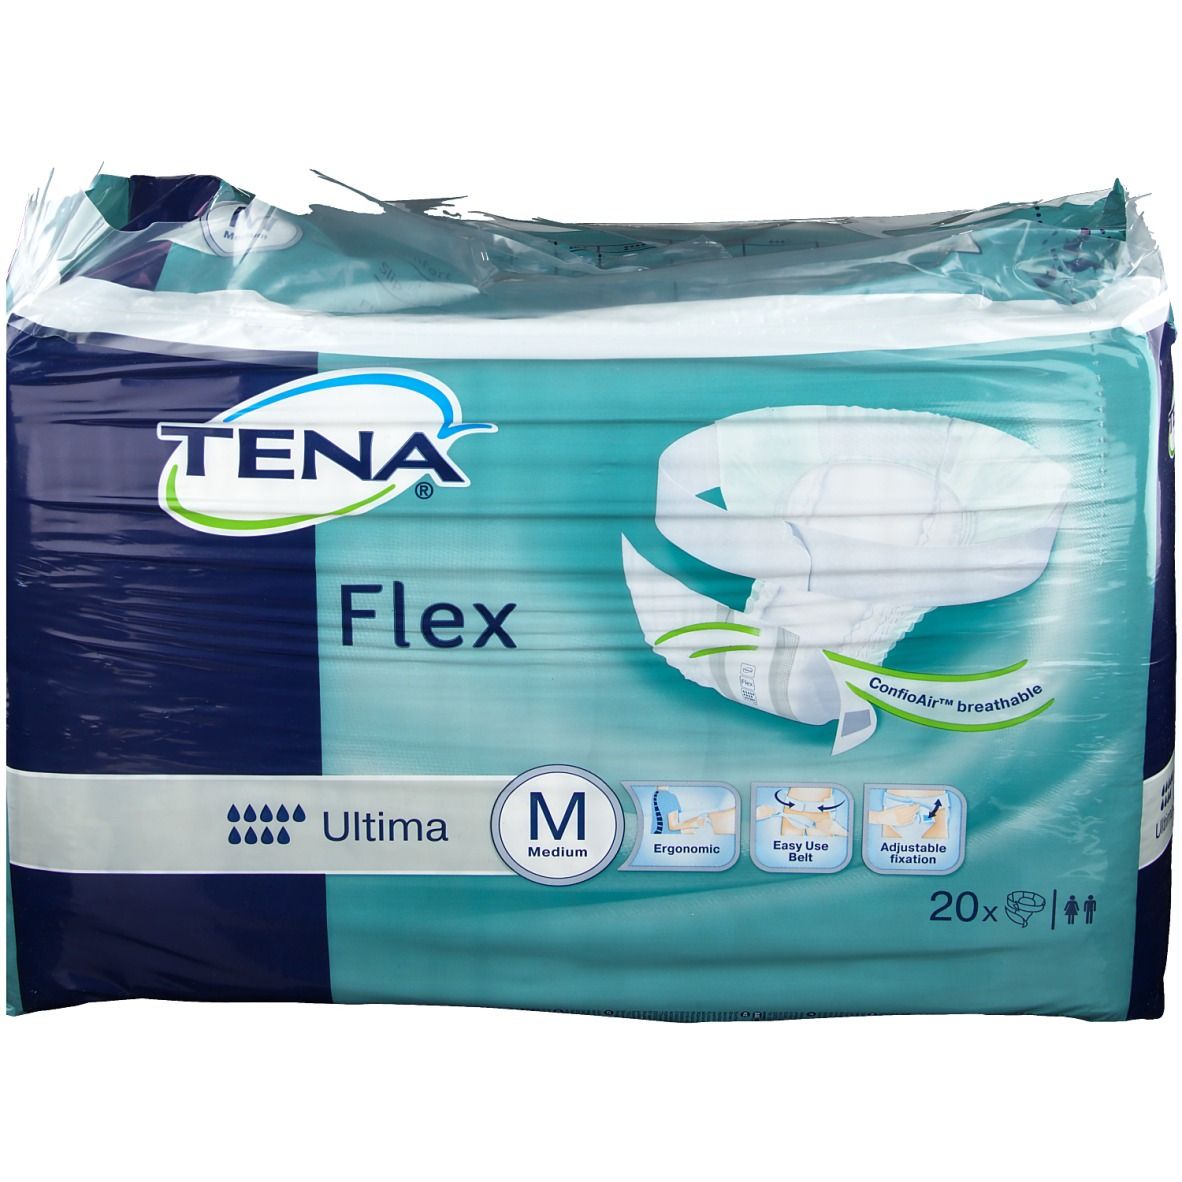 TENA® Flex Ultima M